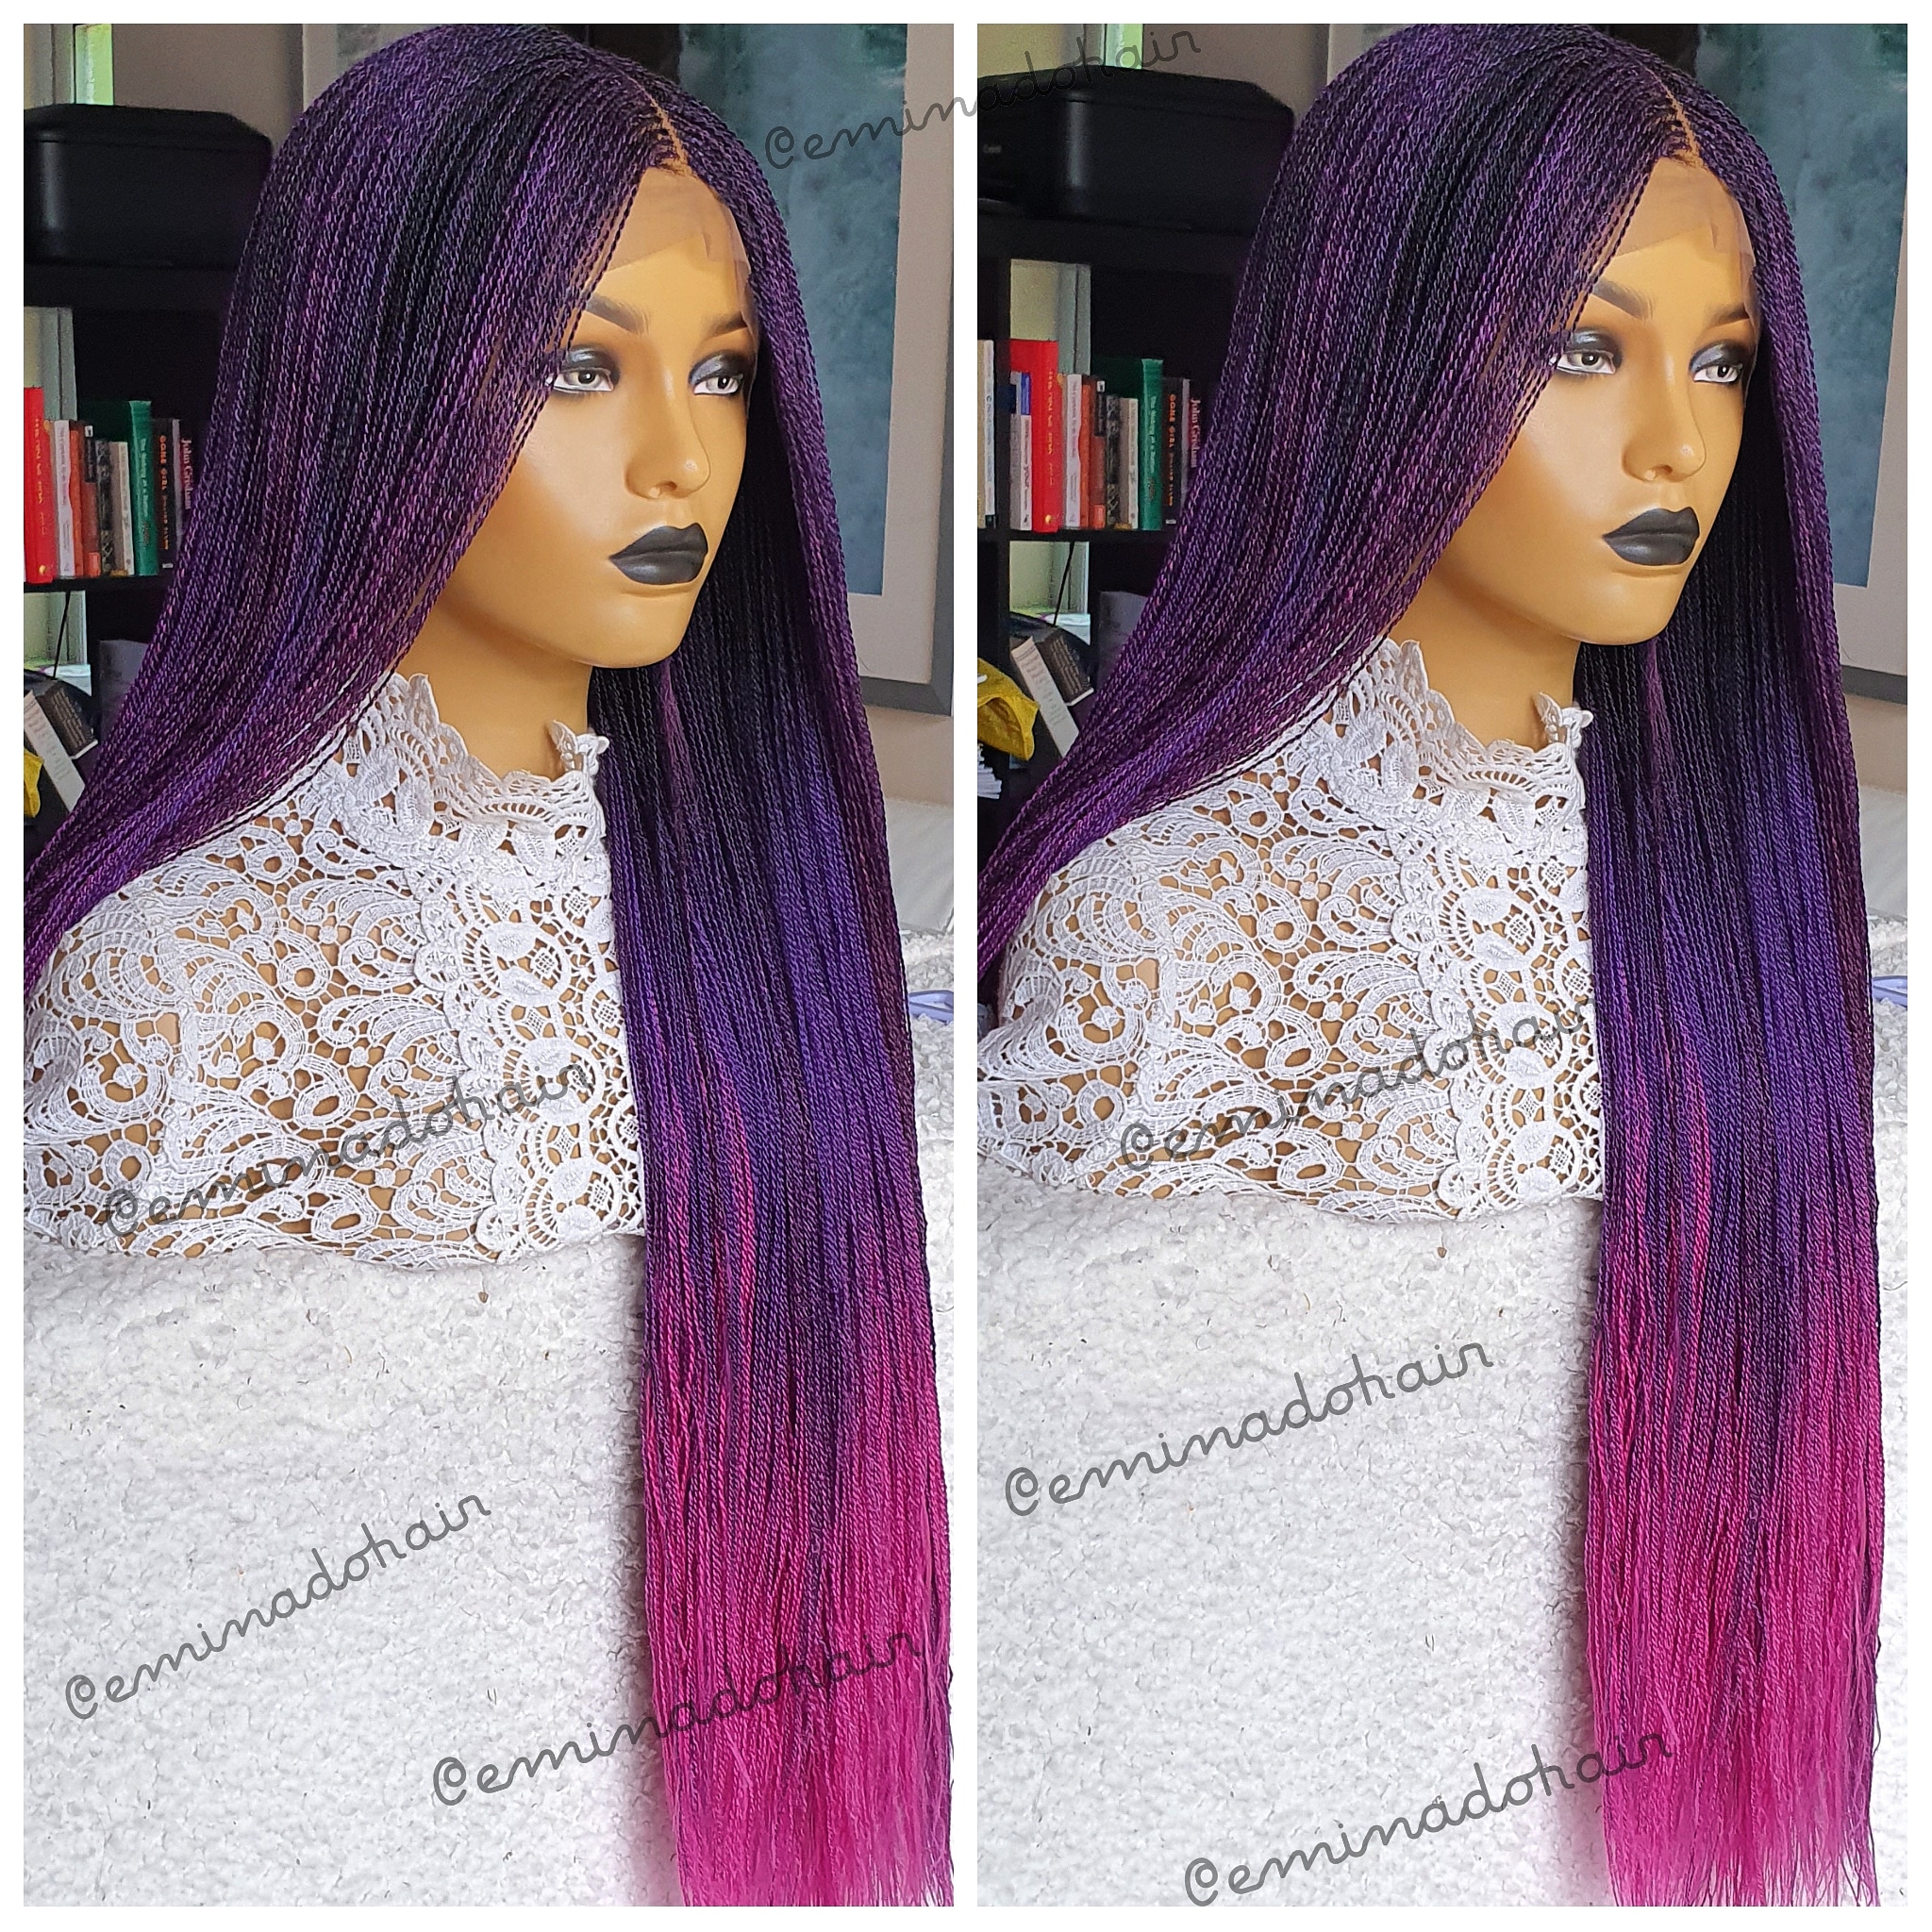 black pink and purple hair